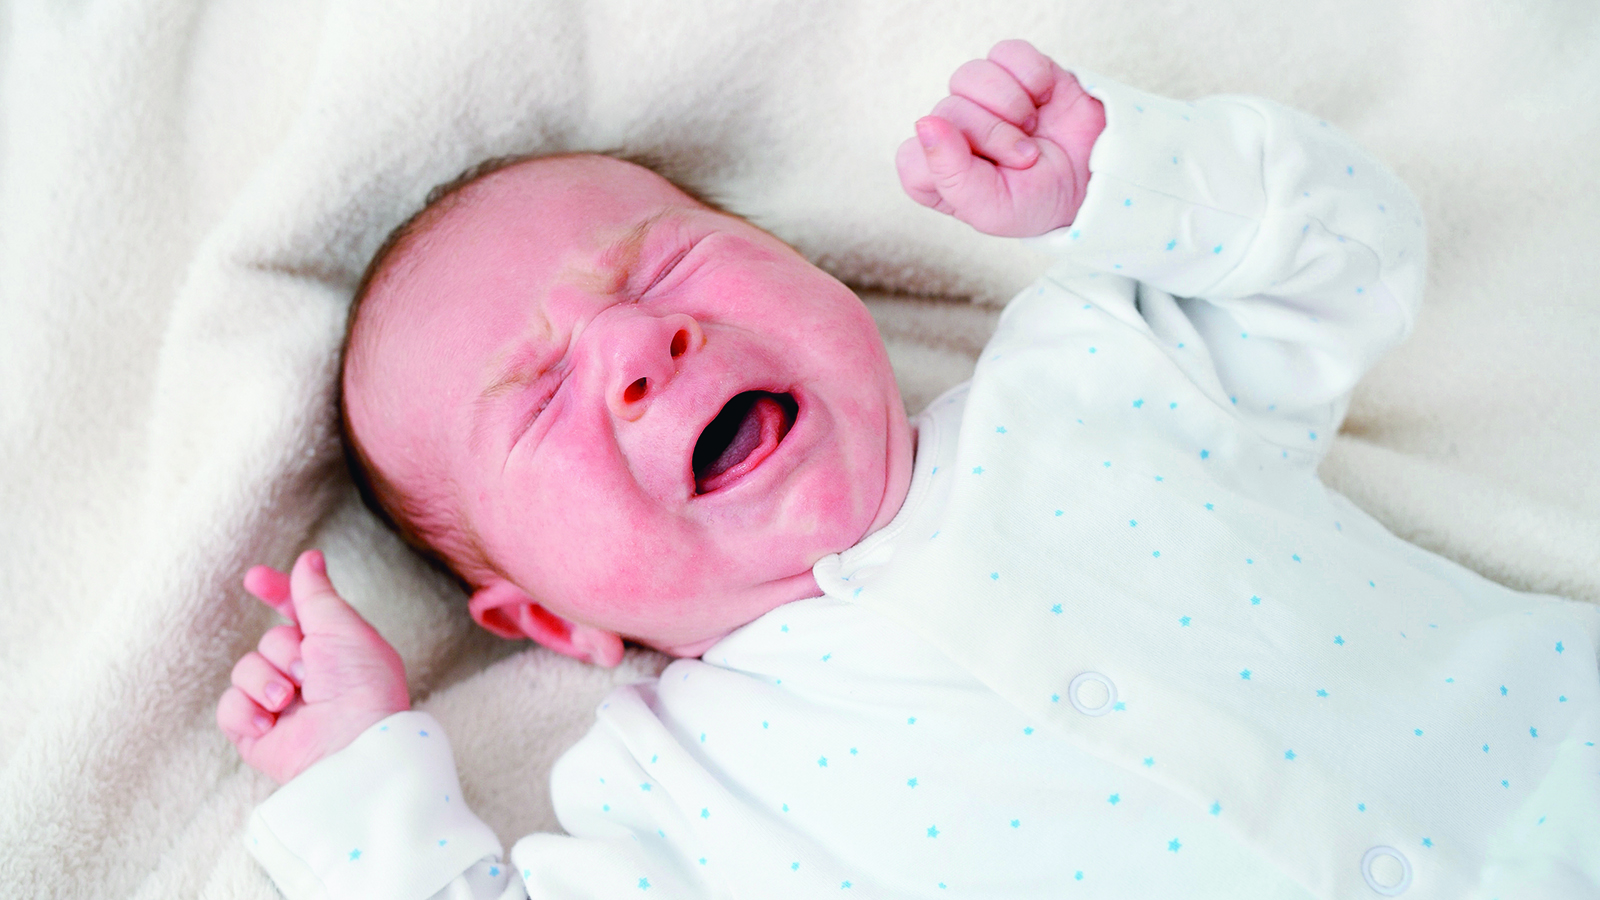 Comment calmer un bébé qui pleure?